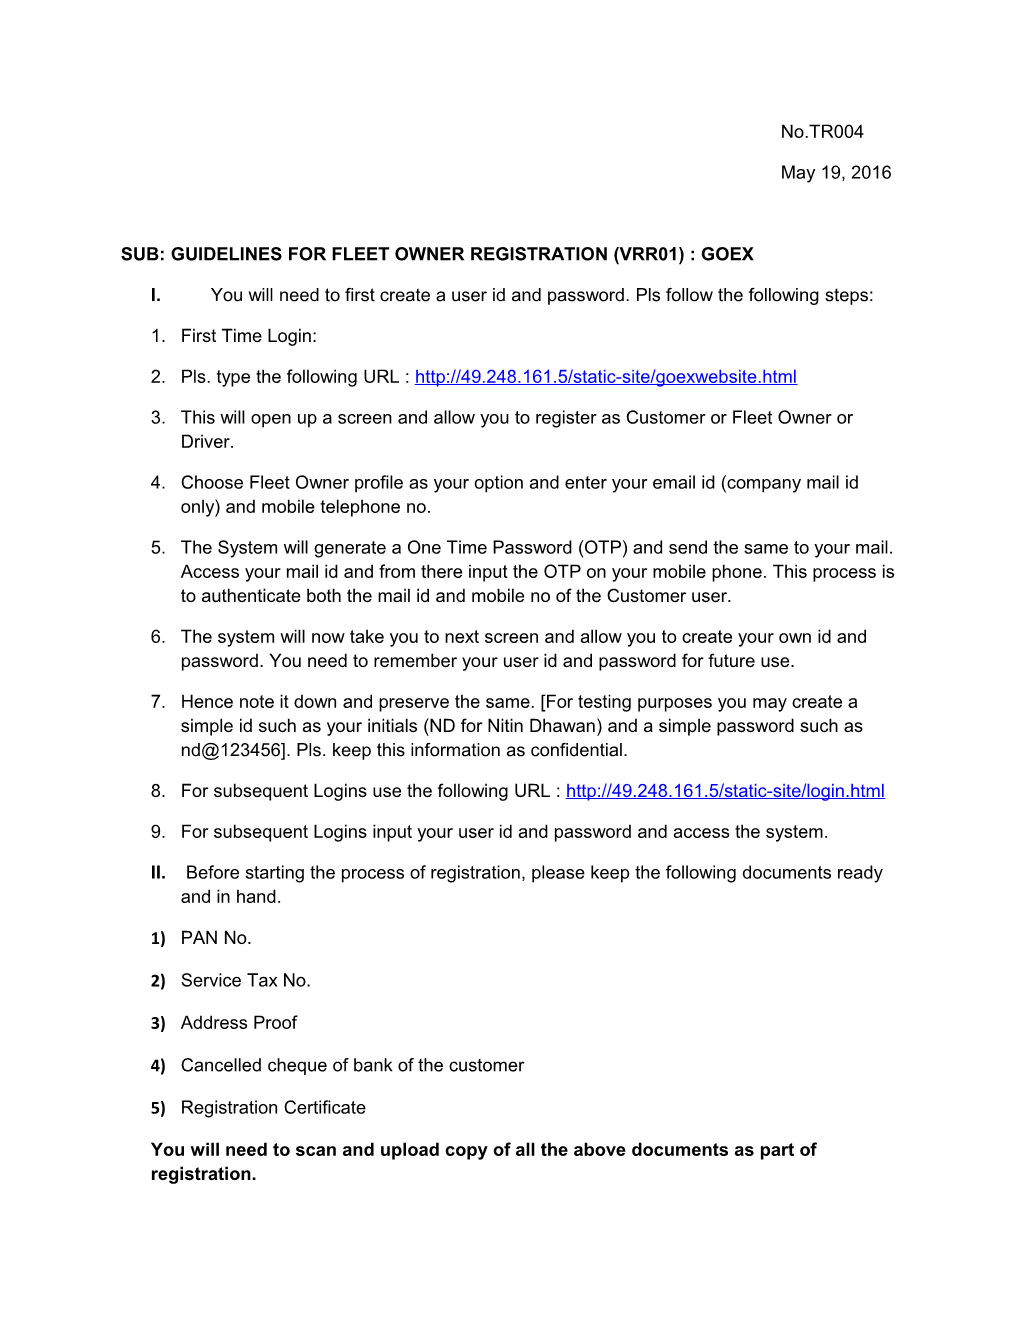 Sub: Guidelines for Fleet Owner Registration (Vrr01) : Goex